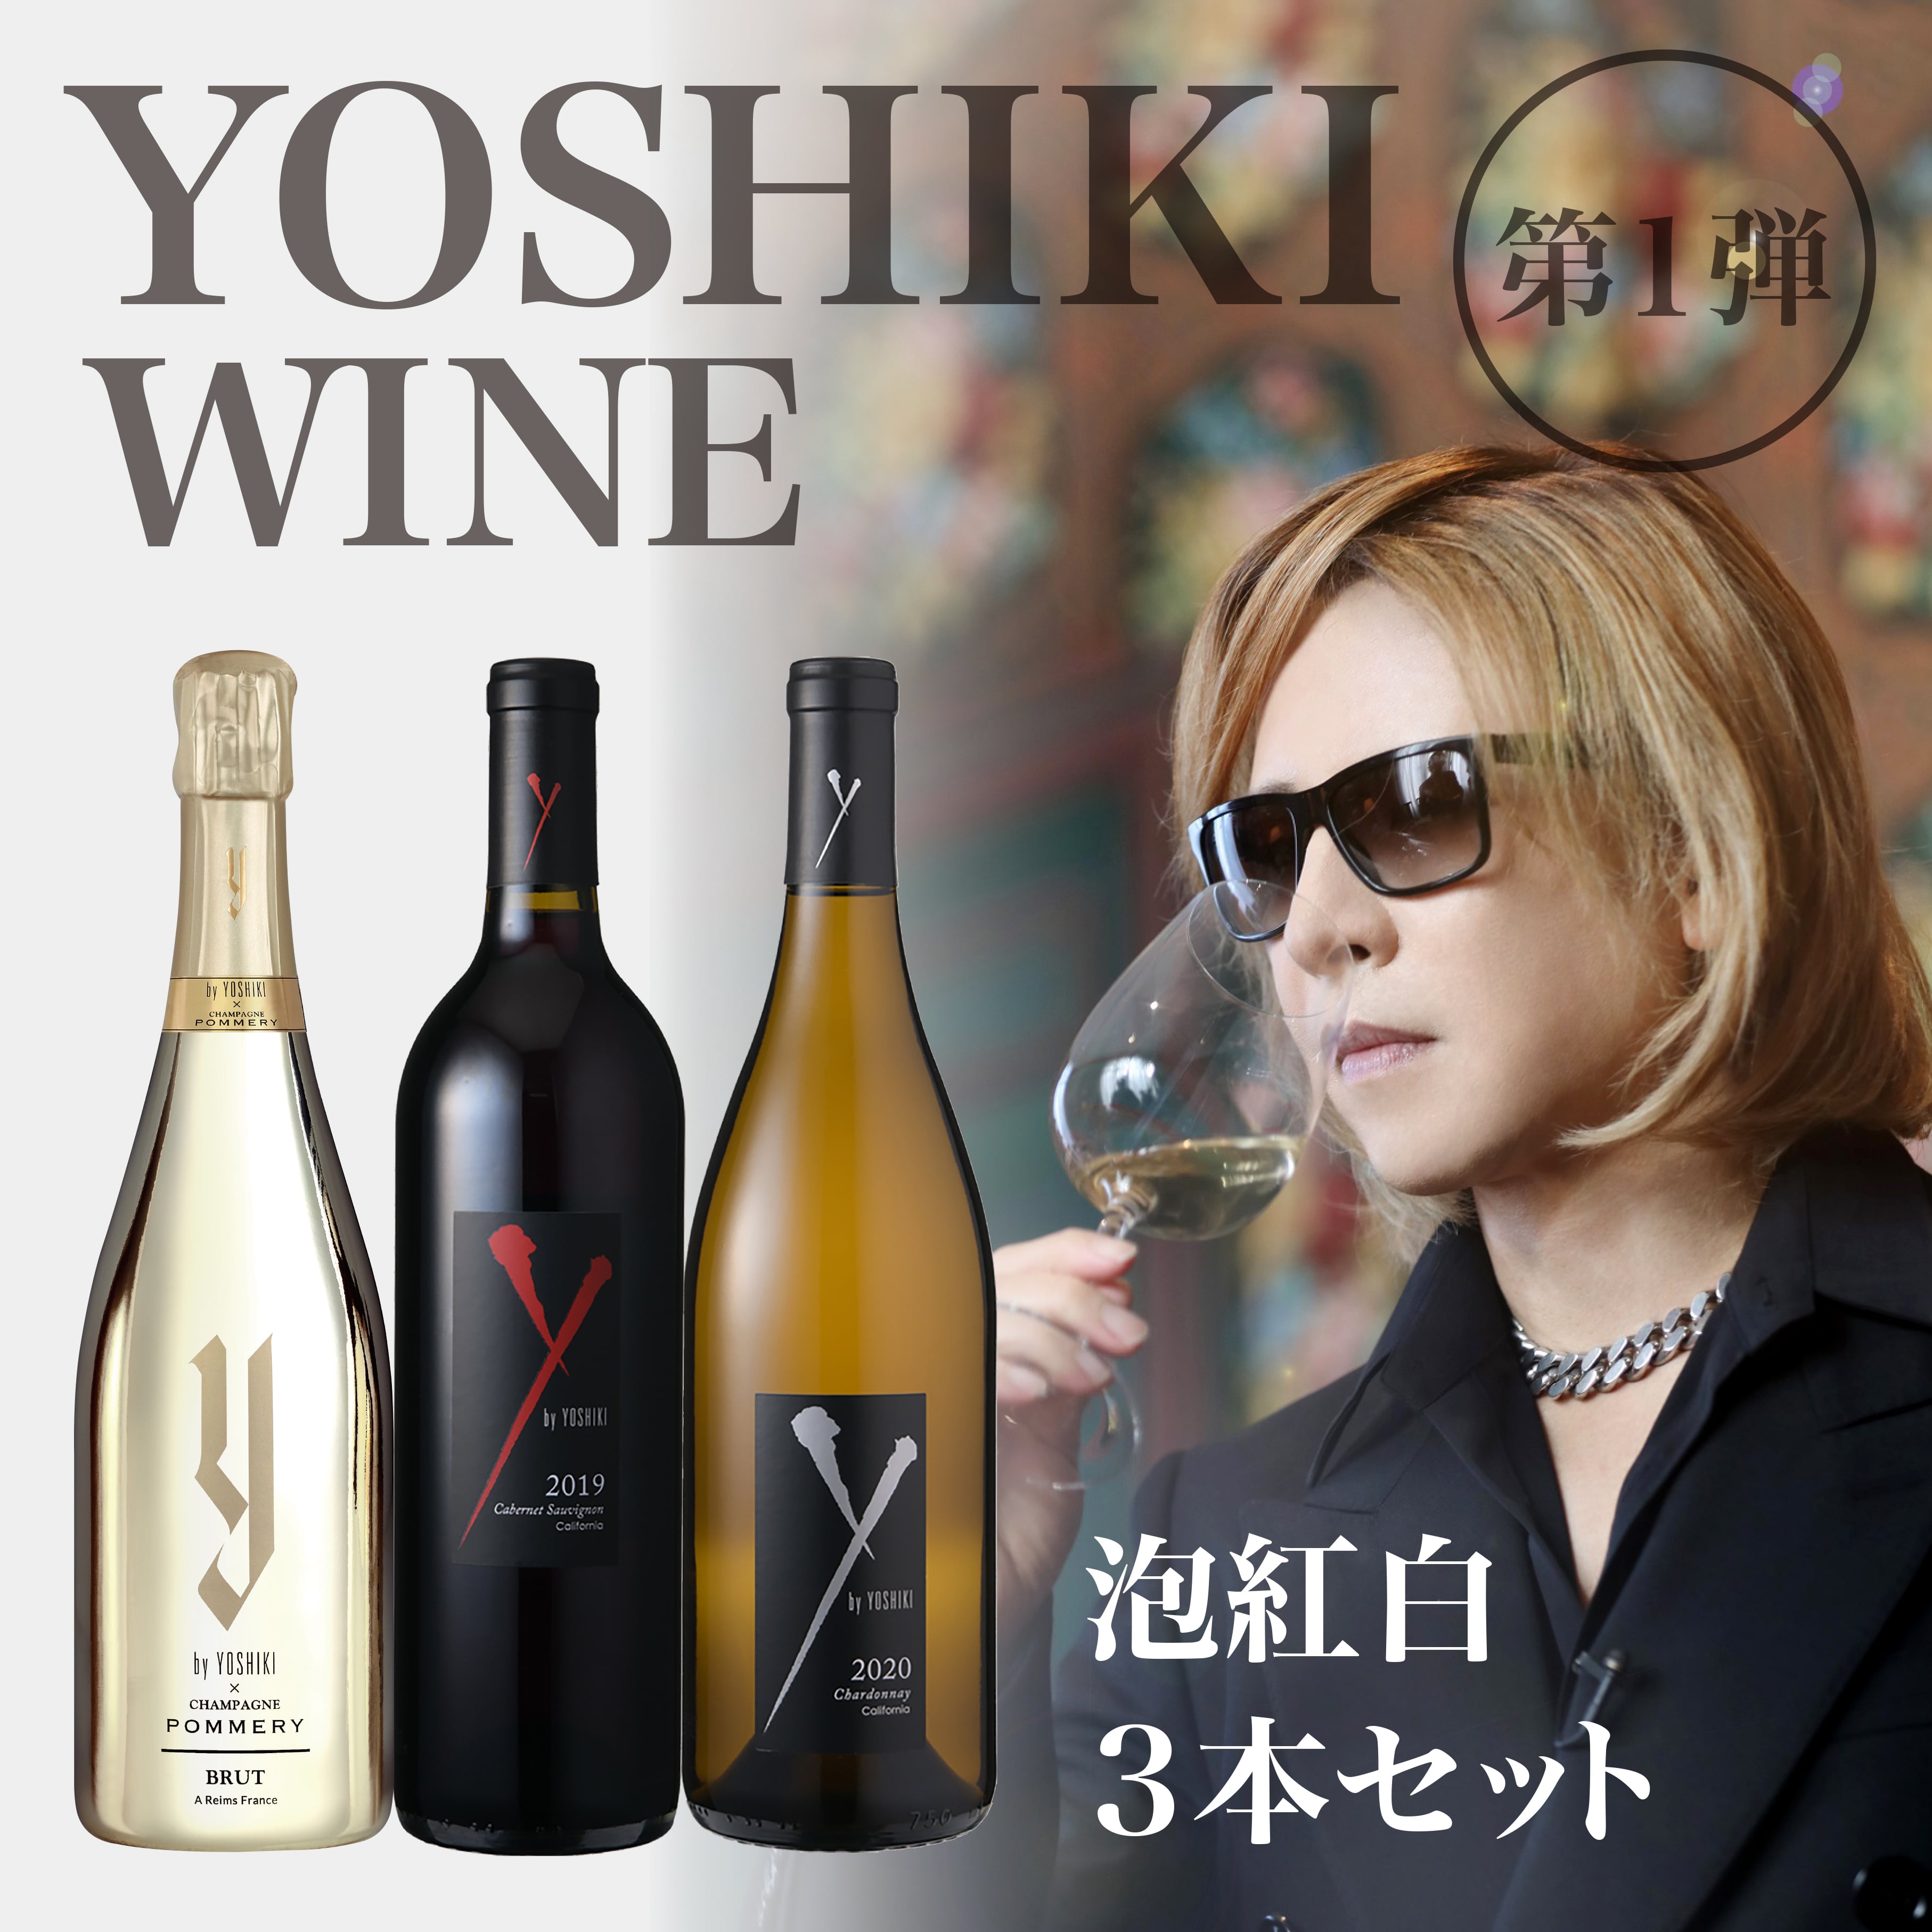 YOSHIKI ワイン